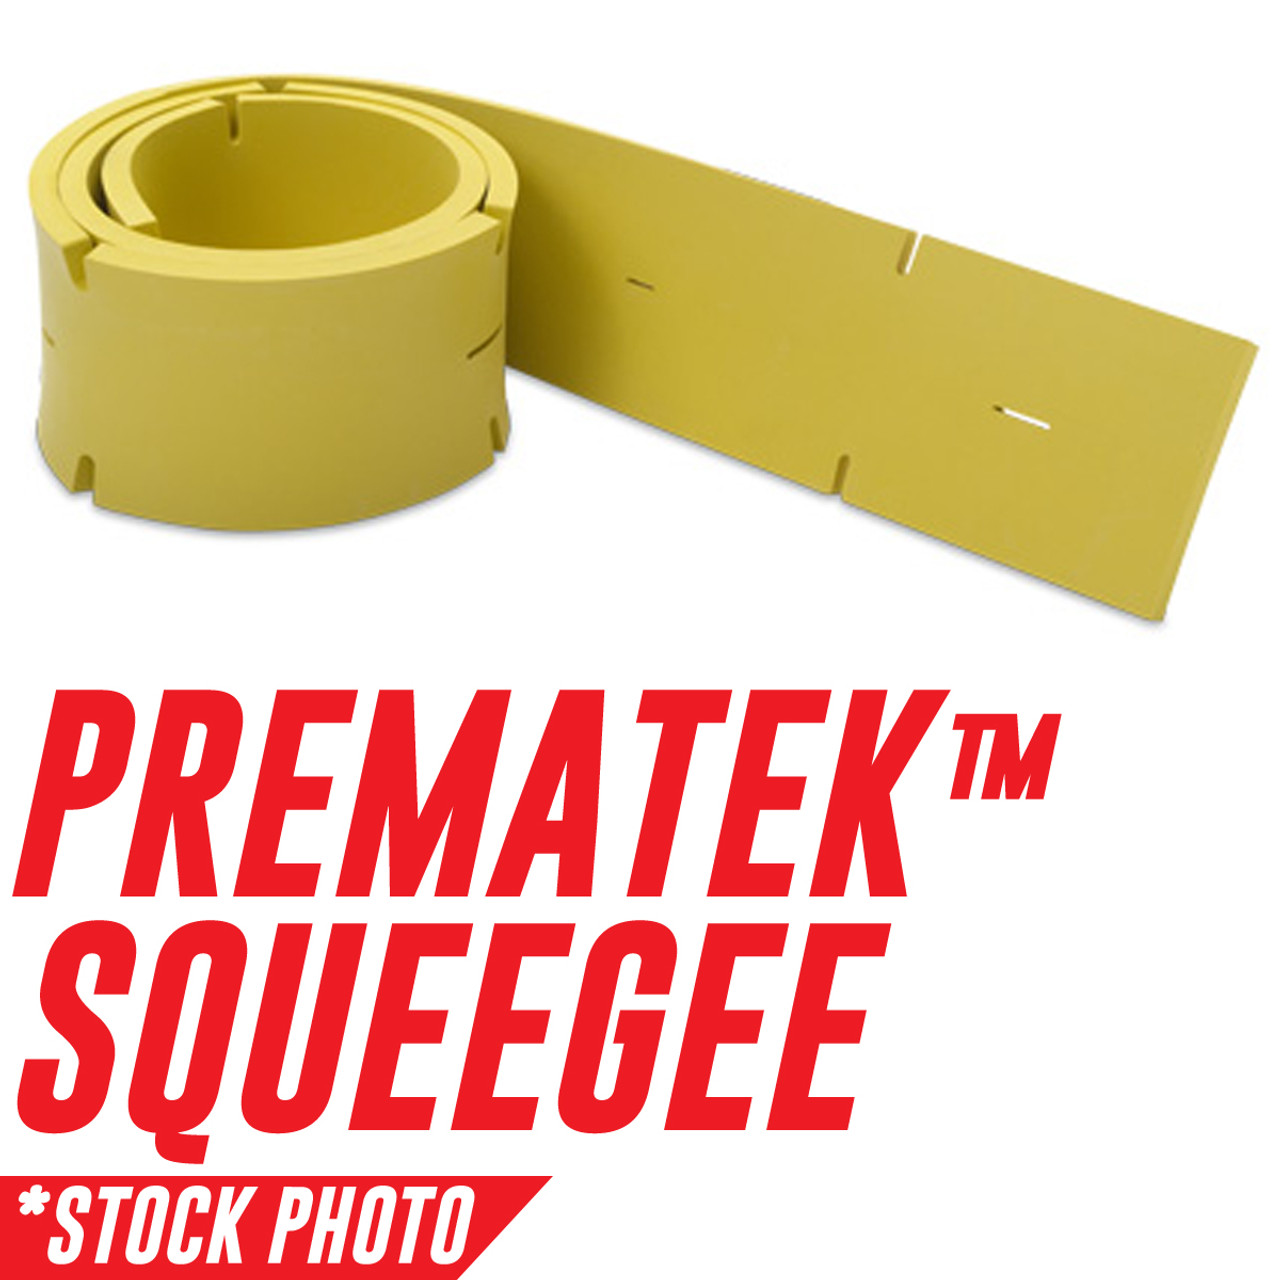 150-755L: Squeegee, Front 30", Prematek fits Factory Cat Models MicroMag, Pilot/RS